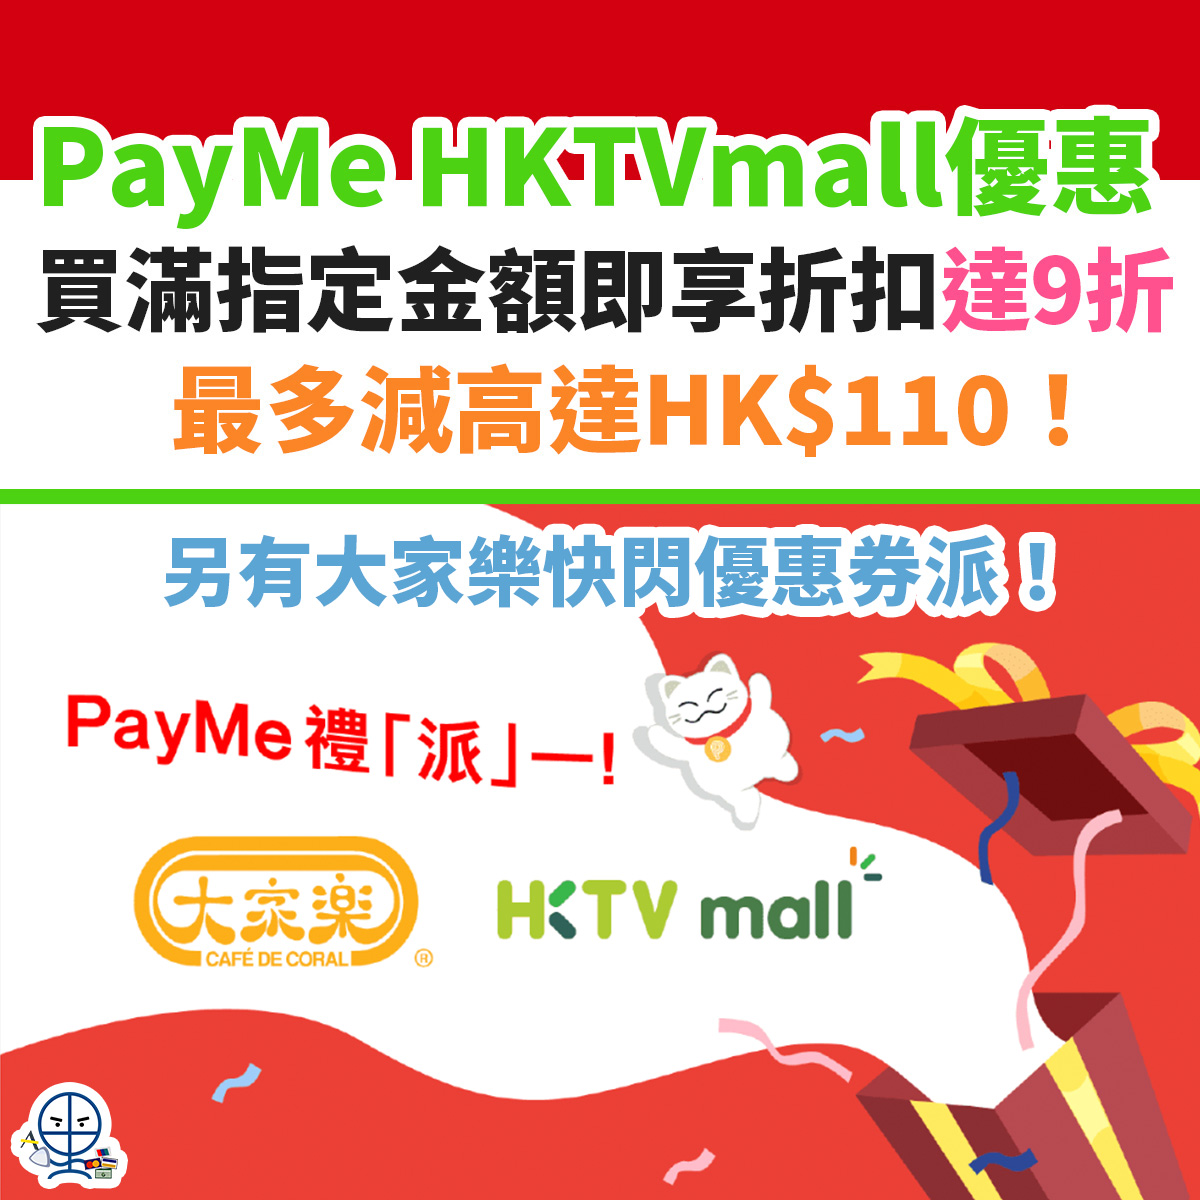 HKTVMALL-PAYME-信用卡－優惠-大家樂